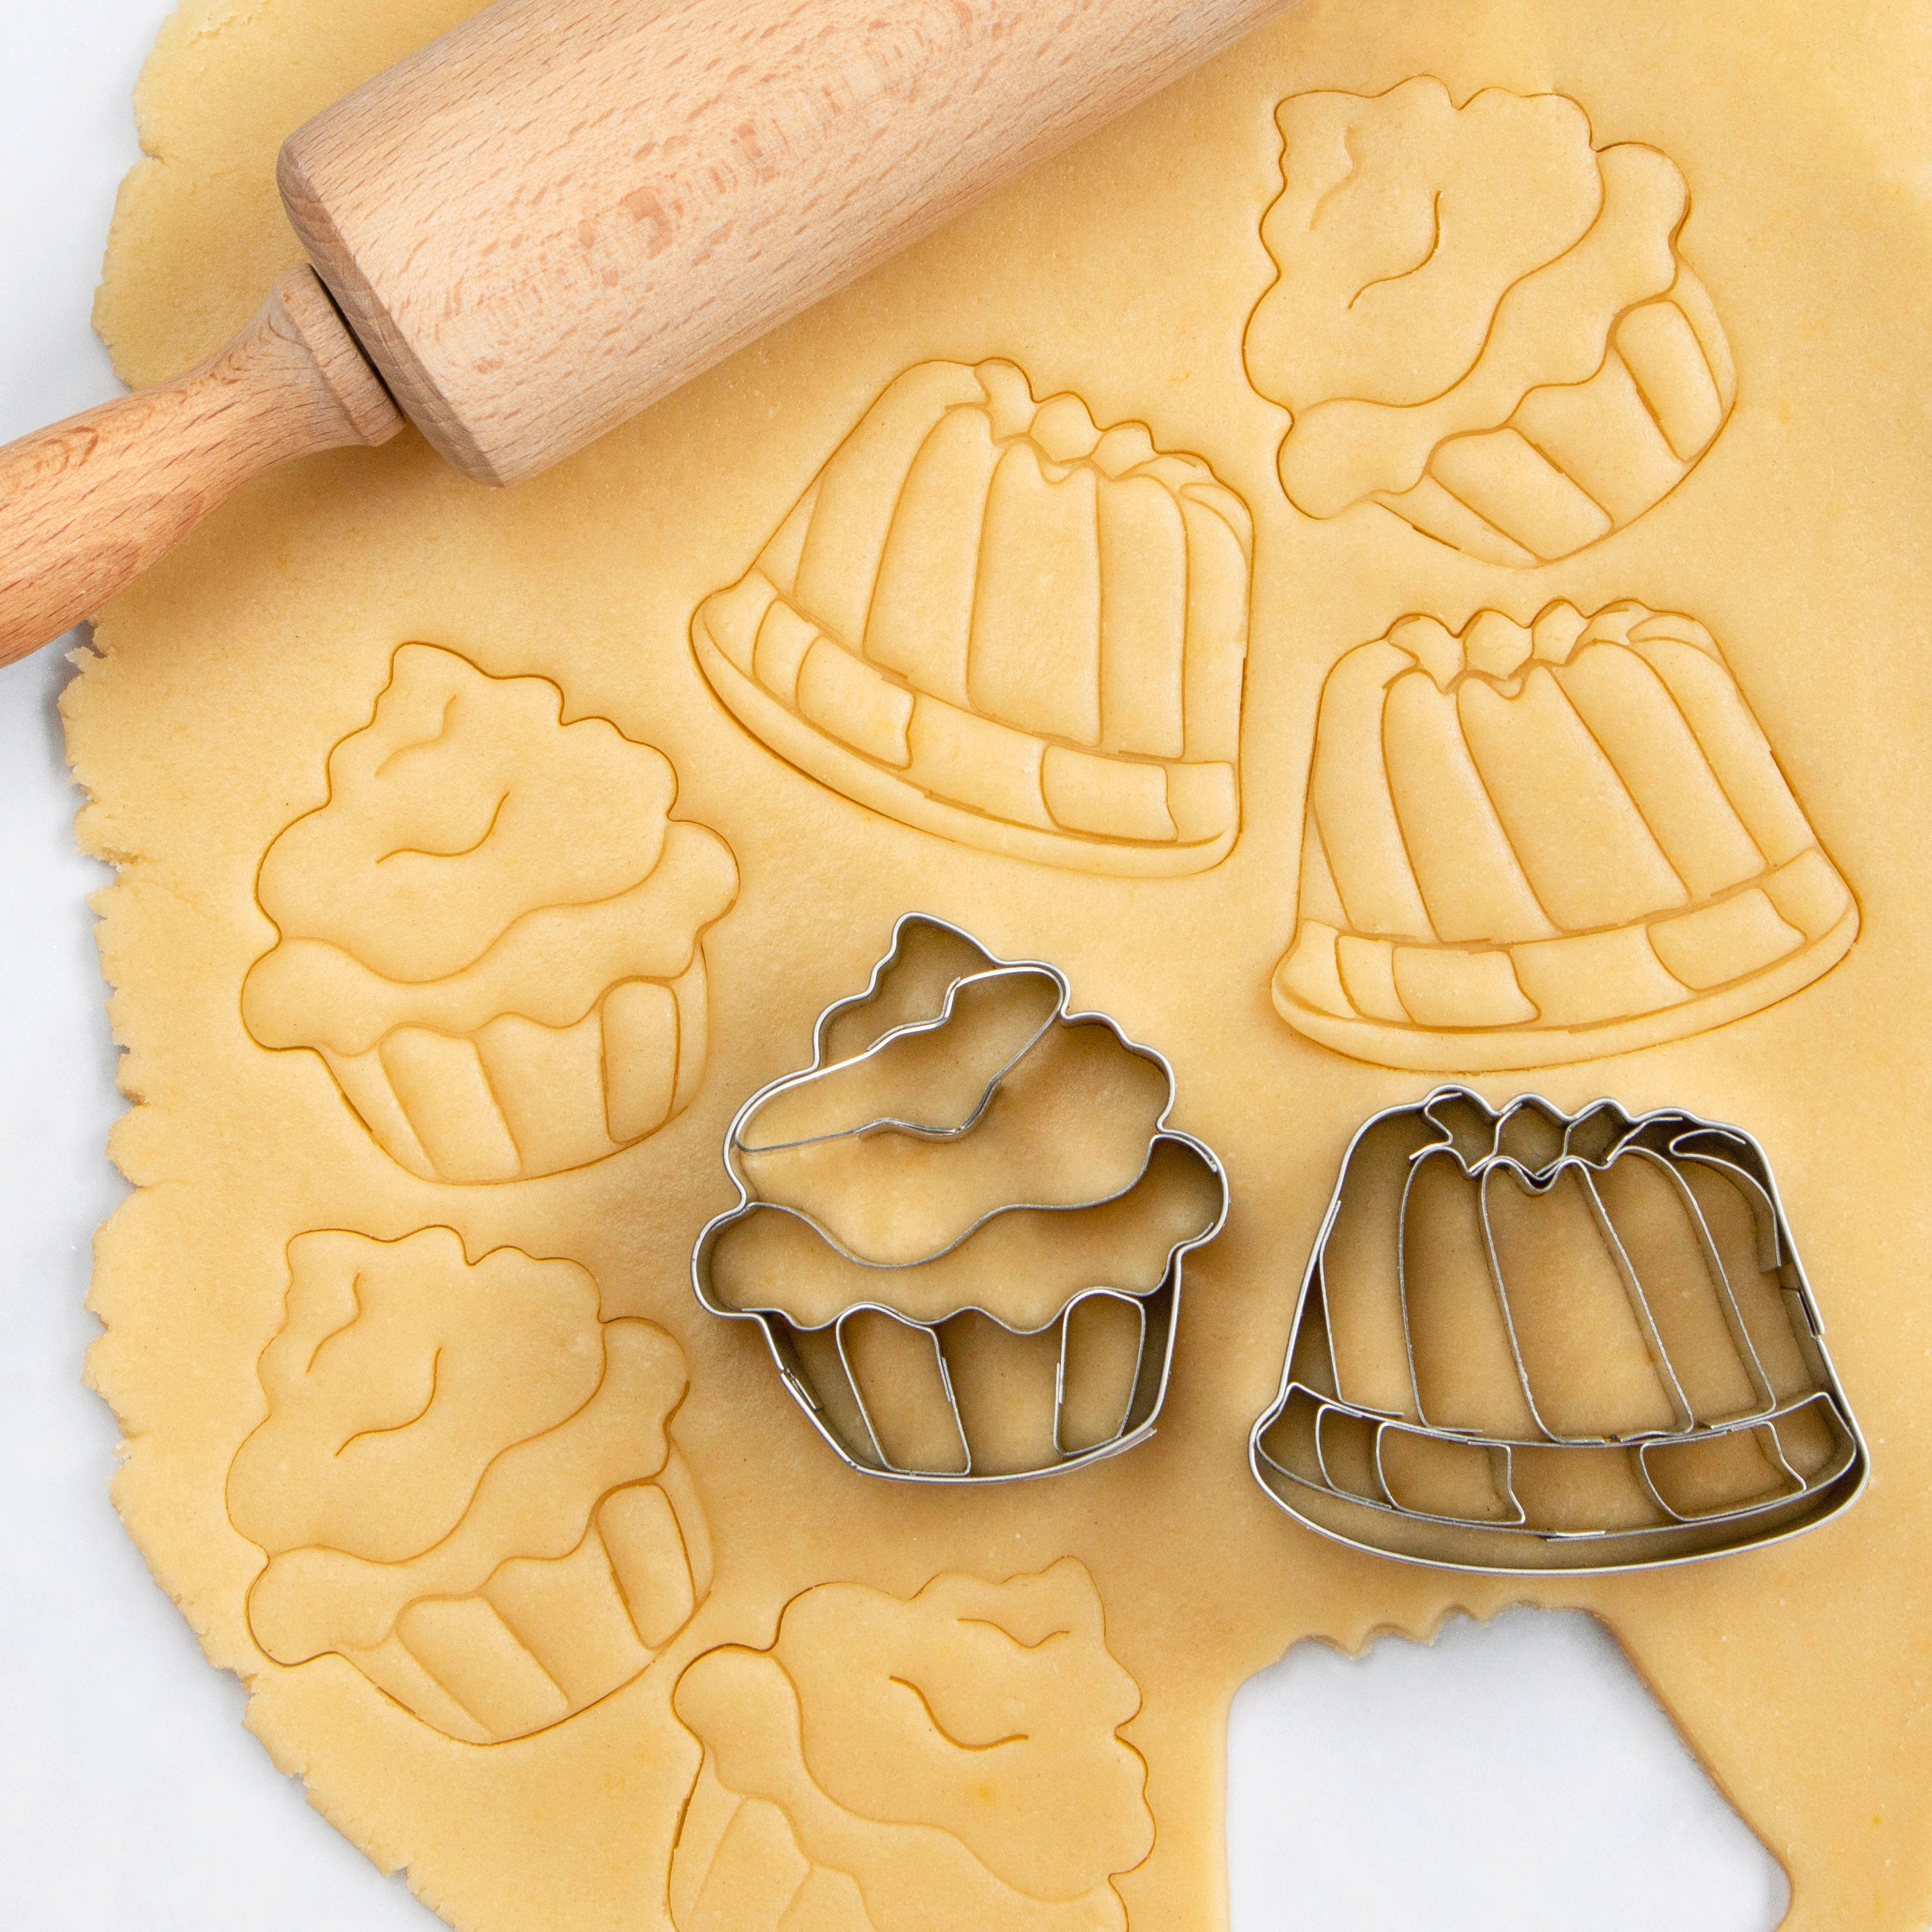 STÄDTER Baking embossing cookie cutter